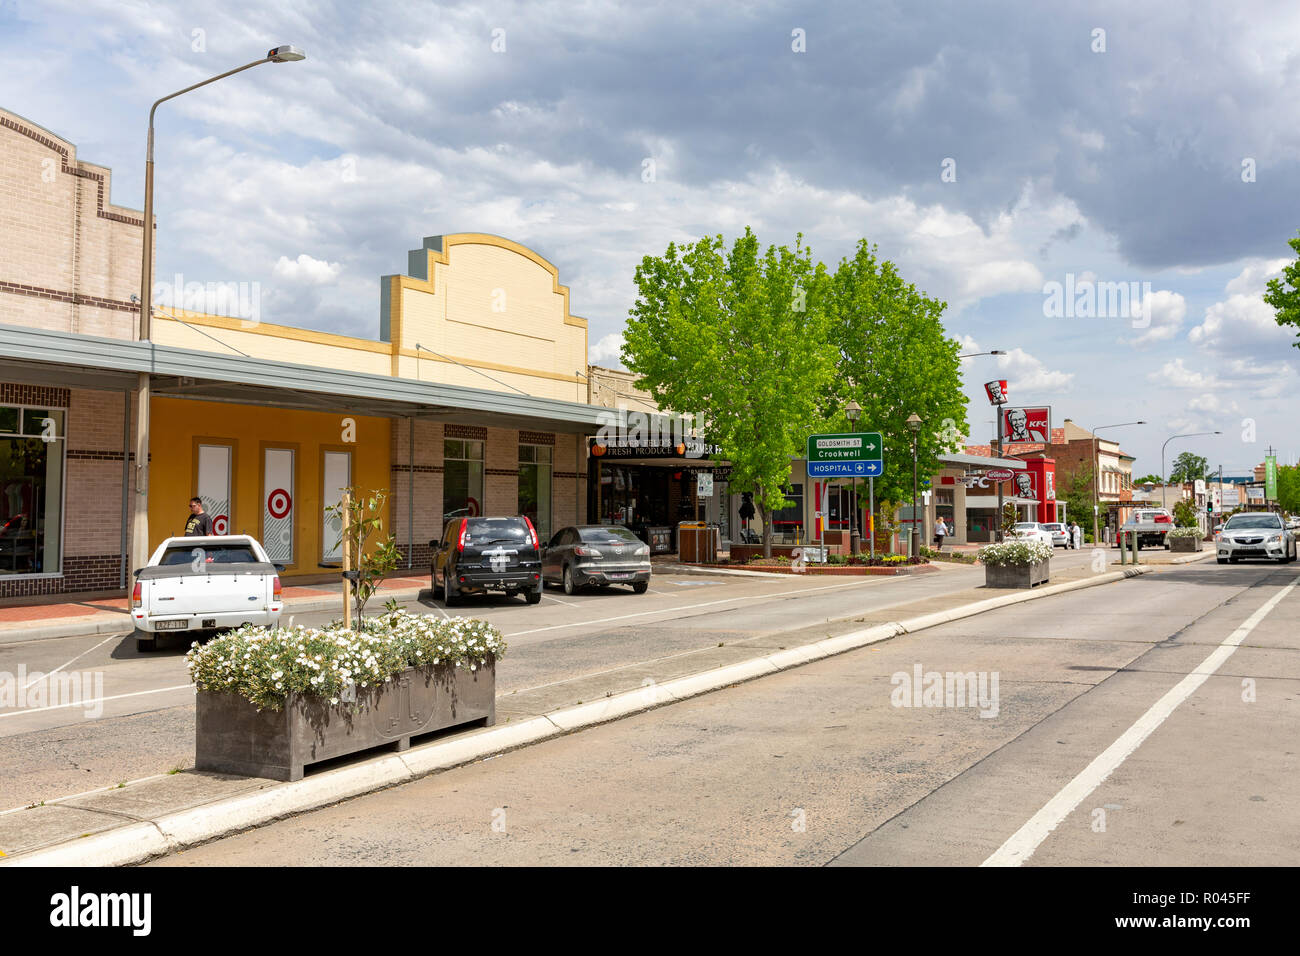 Goulburn centro città e scene di strada,Goulburn è in Australia la prima città terrestre,l'Australia Foto Stock